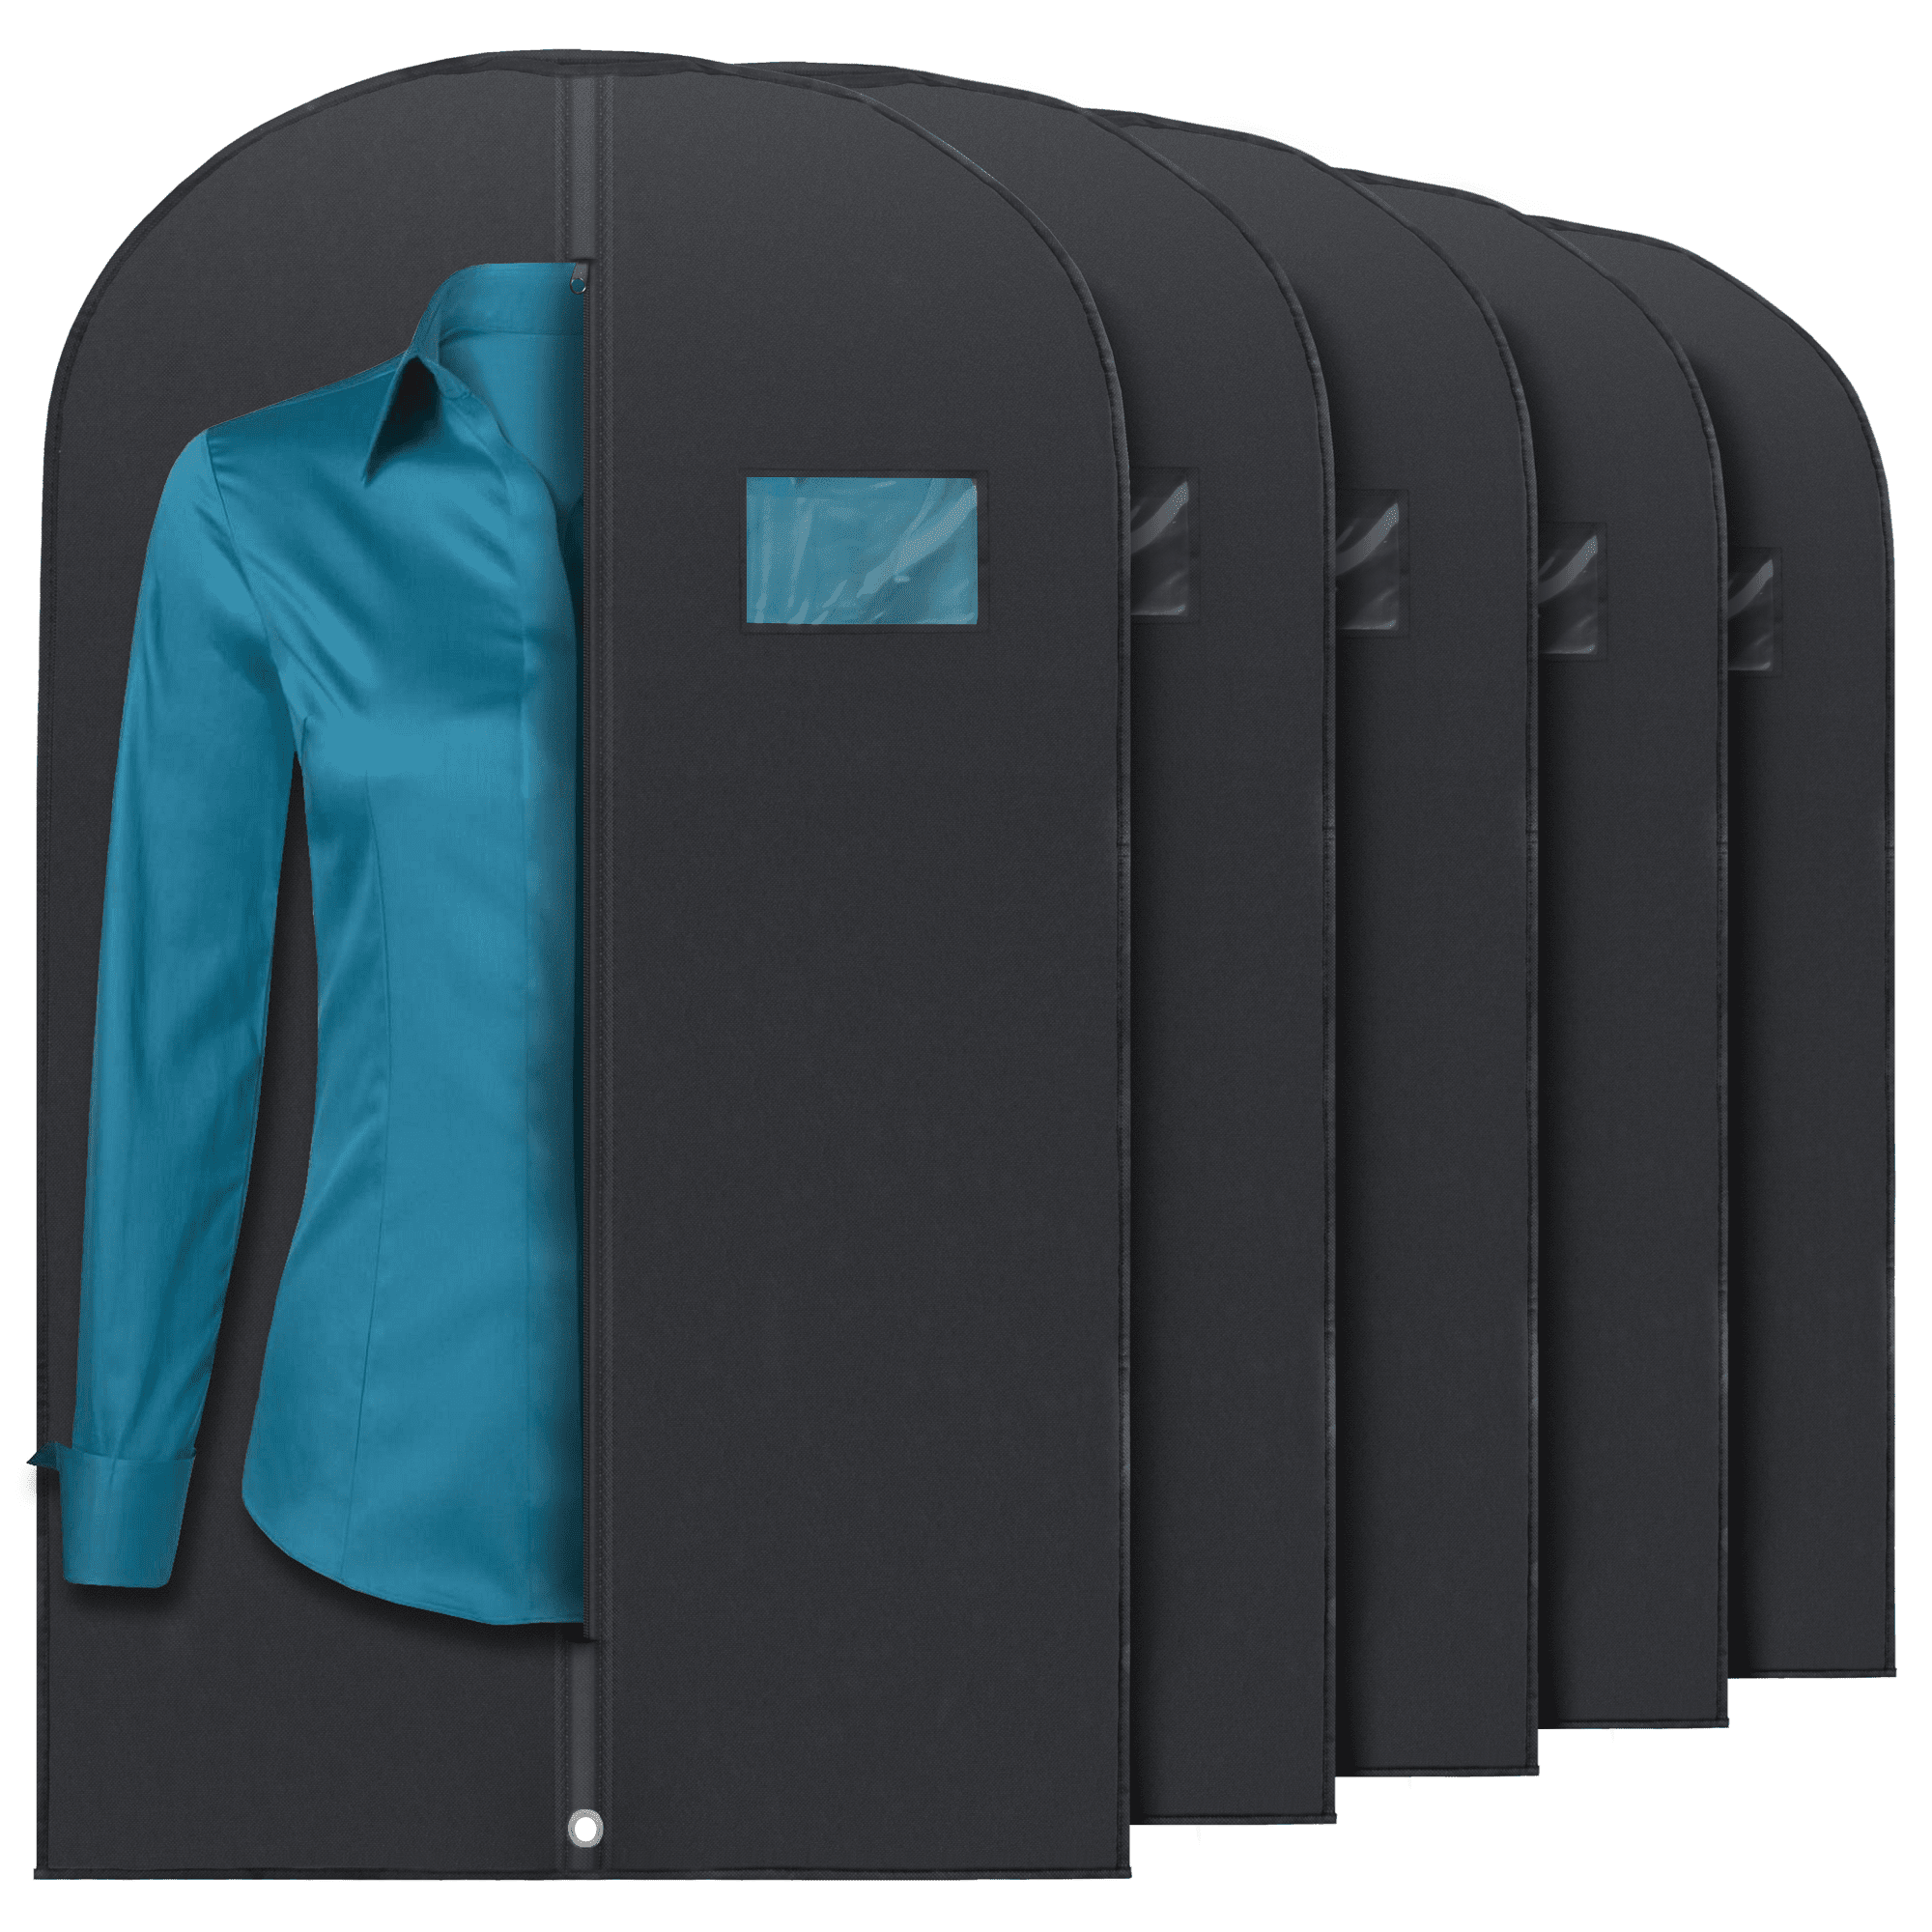 Clothes Dress Garment Dustproof Cover Bags Suit Coat Travel Storage Protector WL 